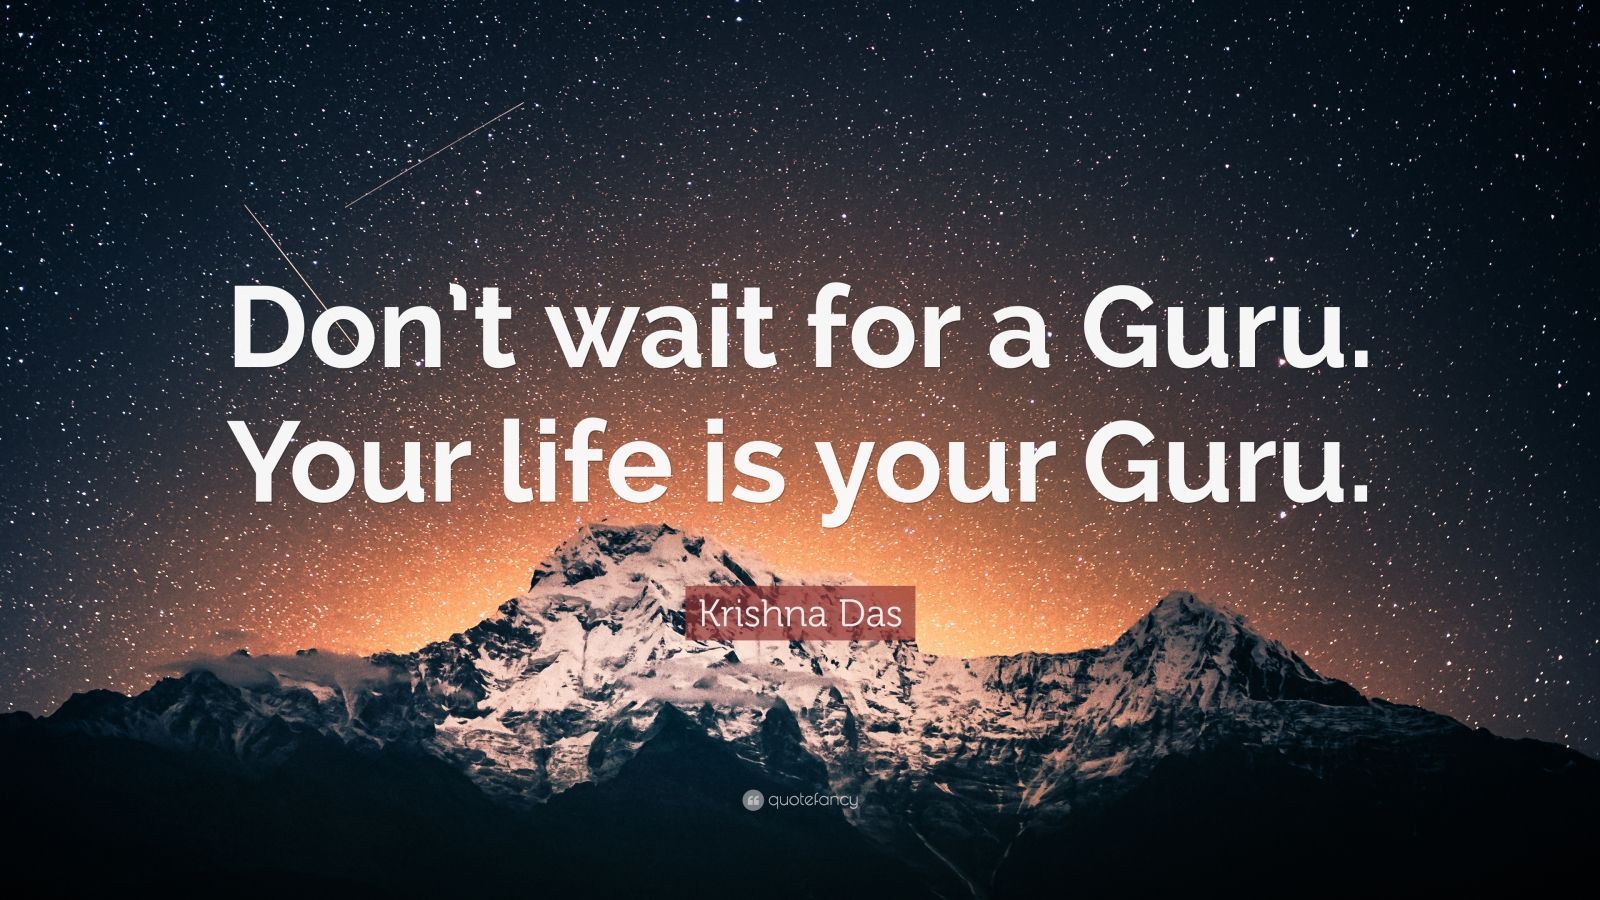 Krishna Das Quote: “Don't wait for a Guru. Your life is your Guru